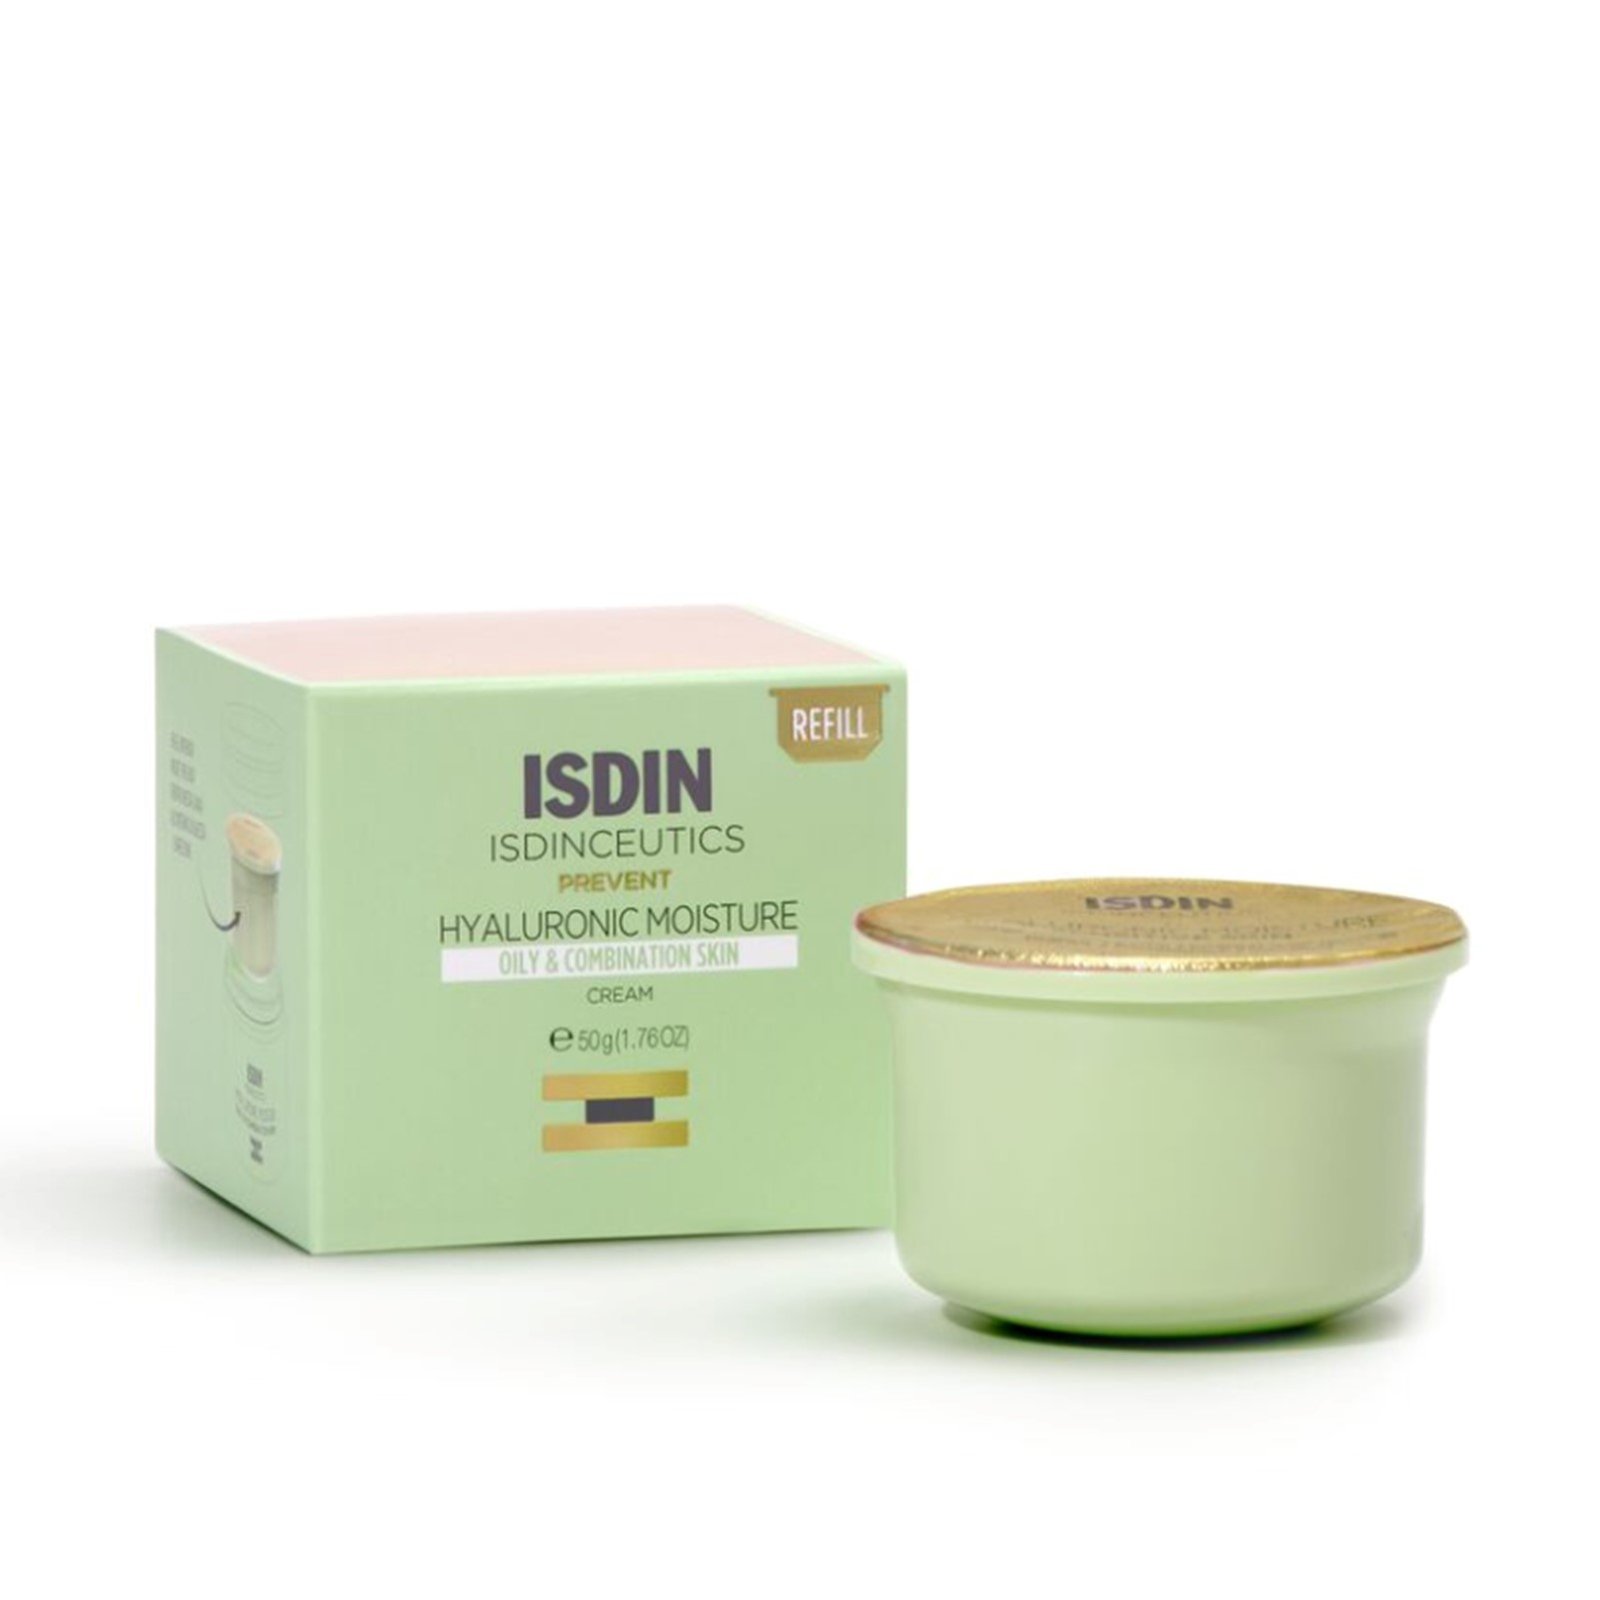 ISDINCEUTICS Hyaluronic Moisture Cream Oily & Combination Skin Refill 50g (1.76 oz)